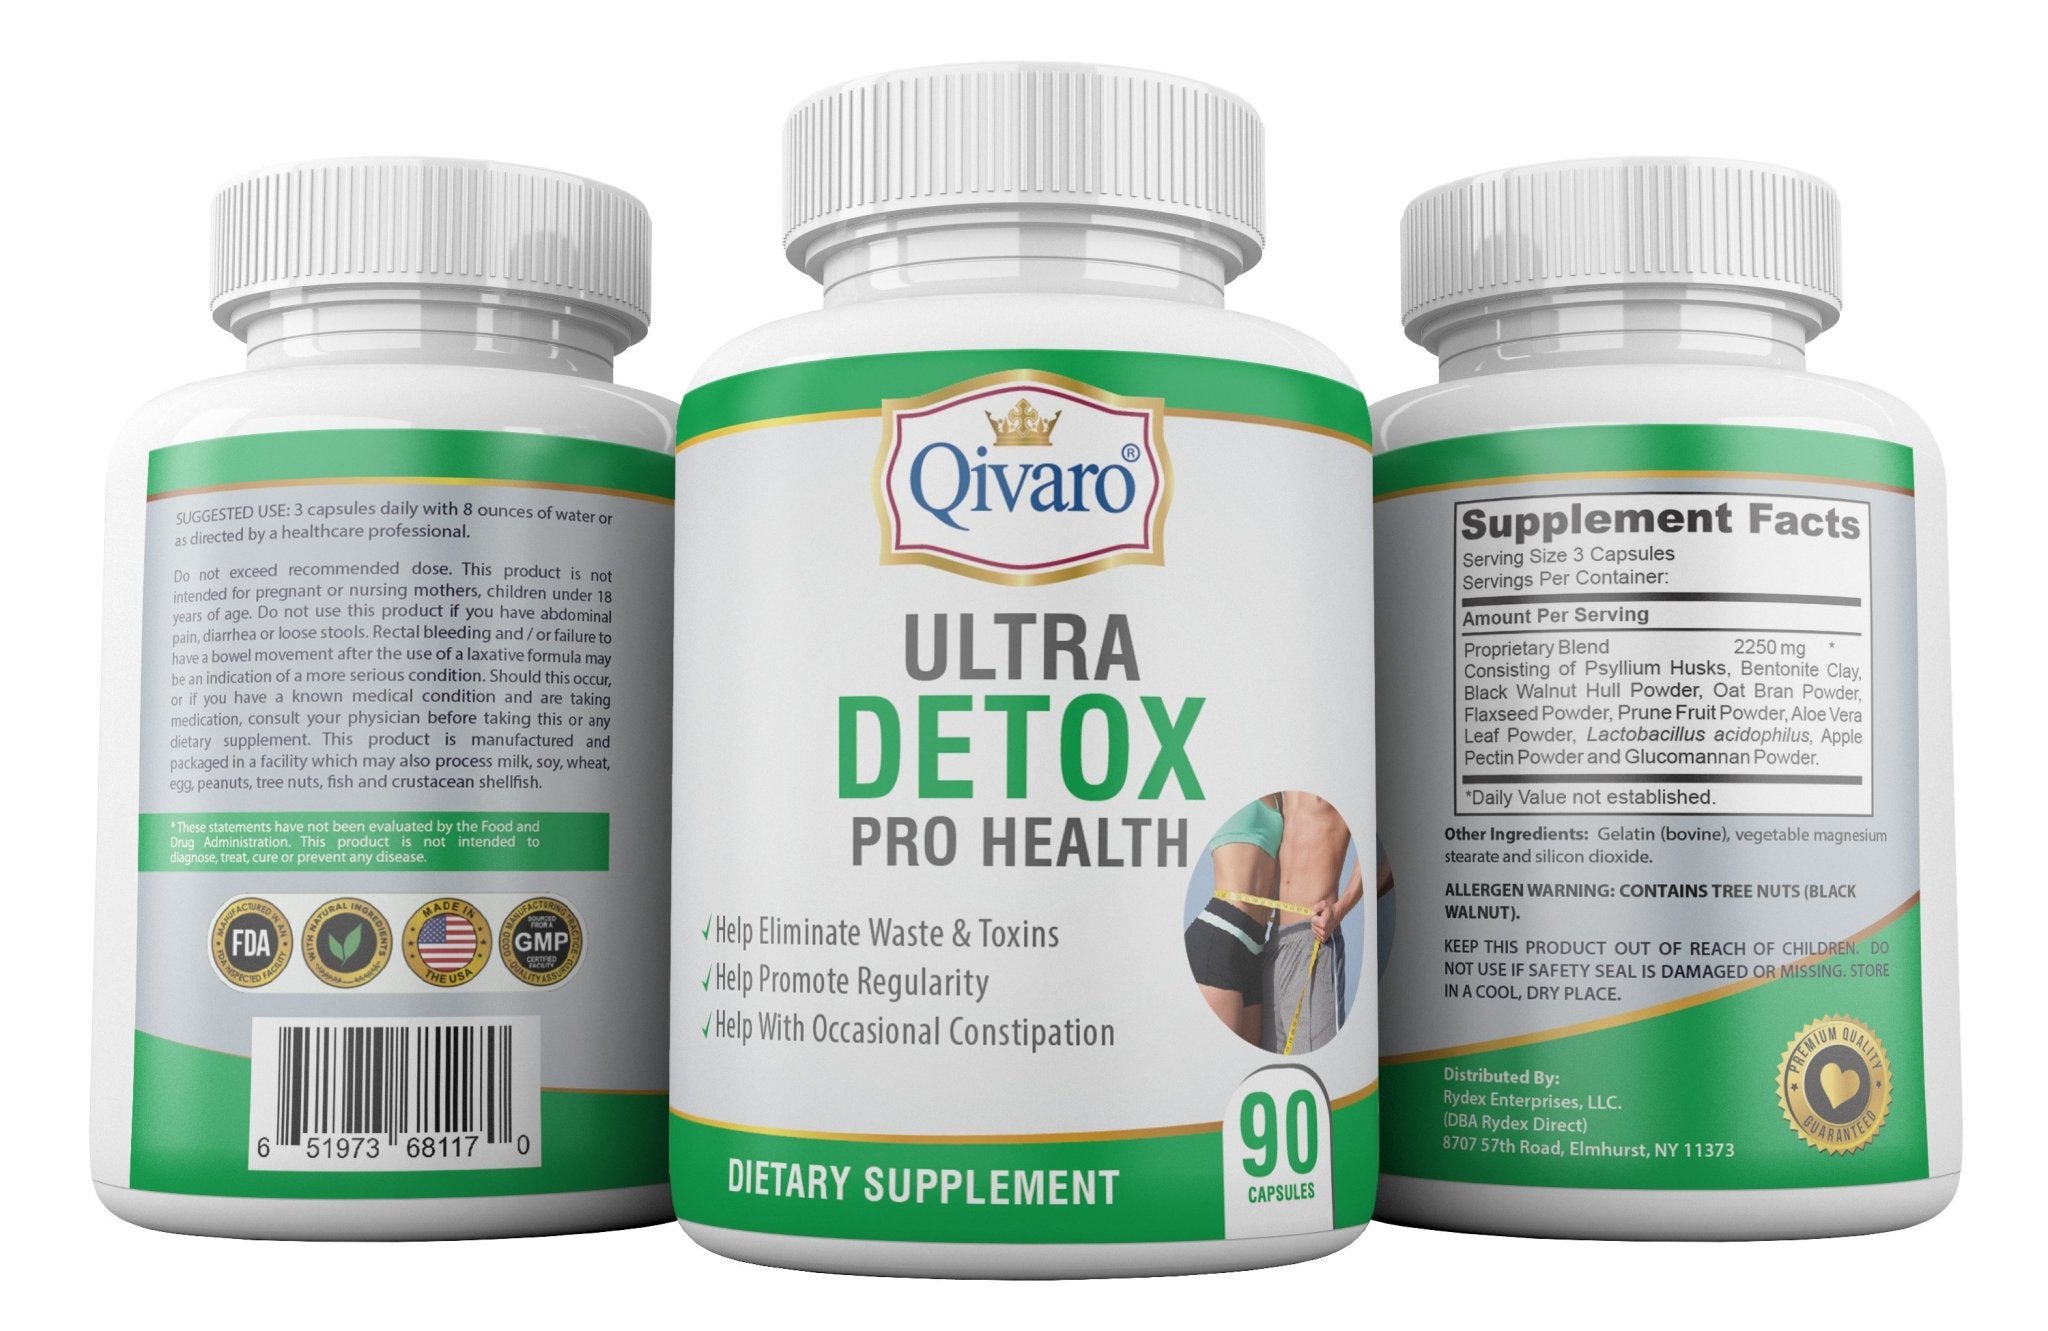 Ultra Detox Pro Health 結腸寶 (90 caps) - Qivaro USA